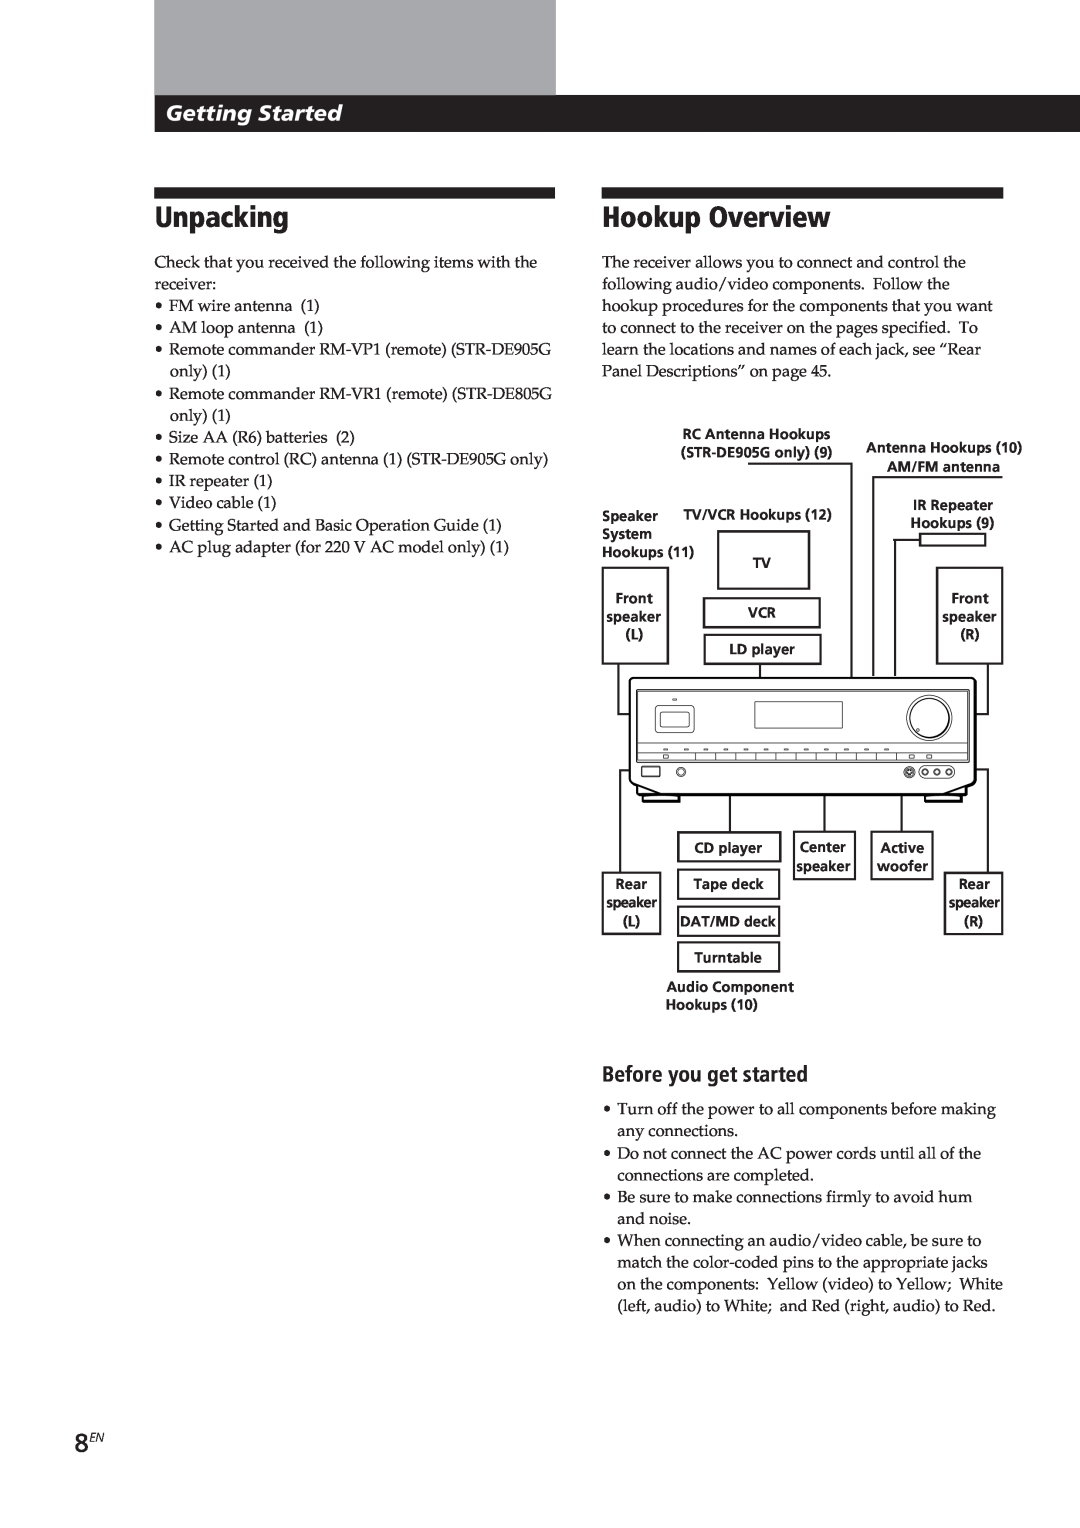 Sony STR-DE905G, STR-DE805G manual Unpacking, Hookup Overview, Getting Started, Before you get started 